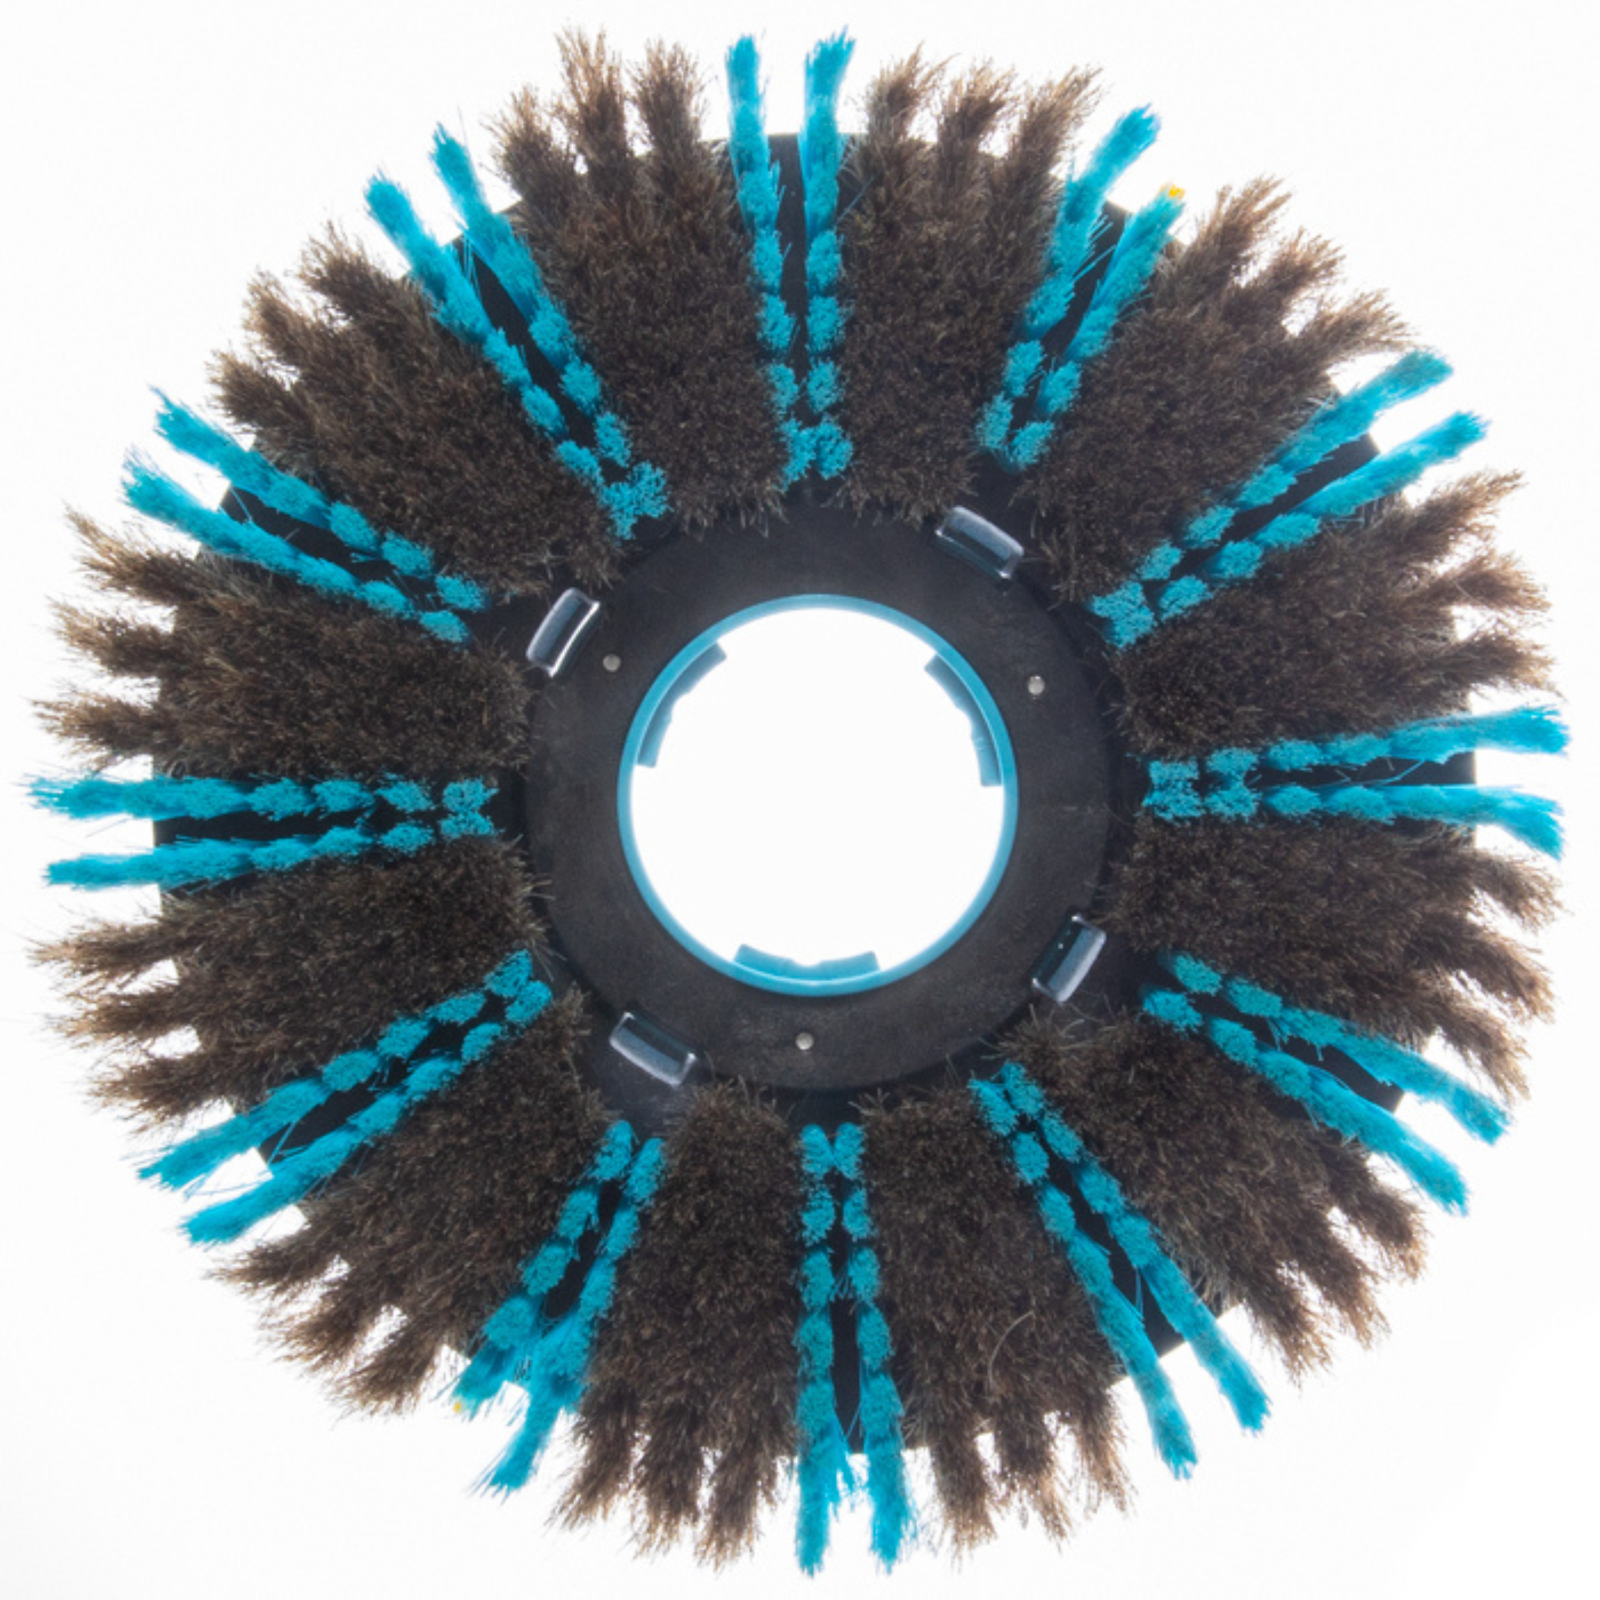 I-Mop XXL Floor Brushes - Natural hair brush